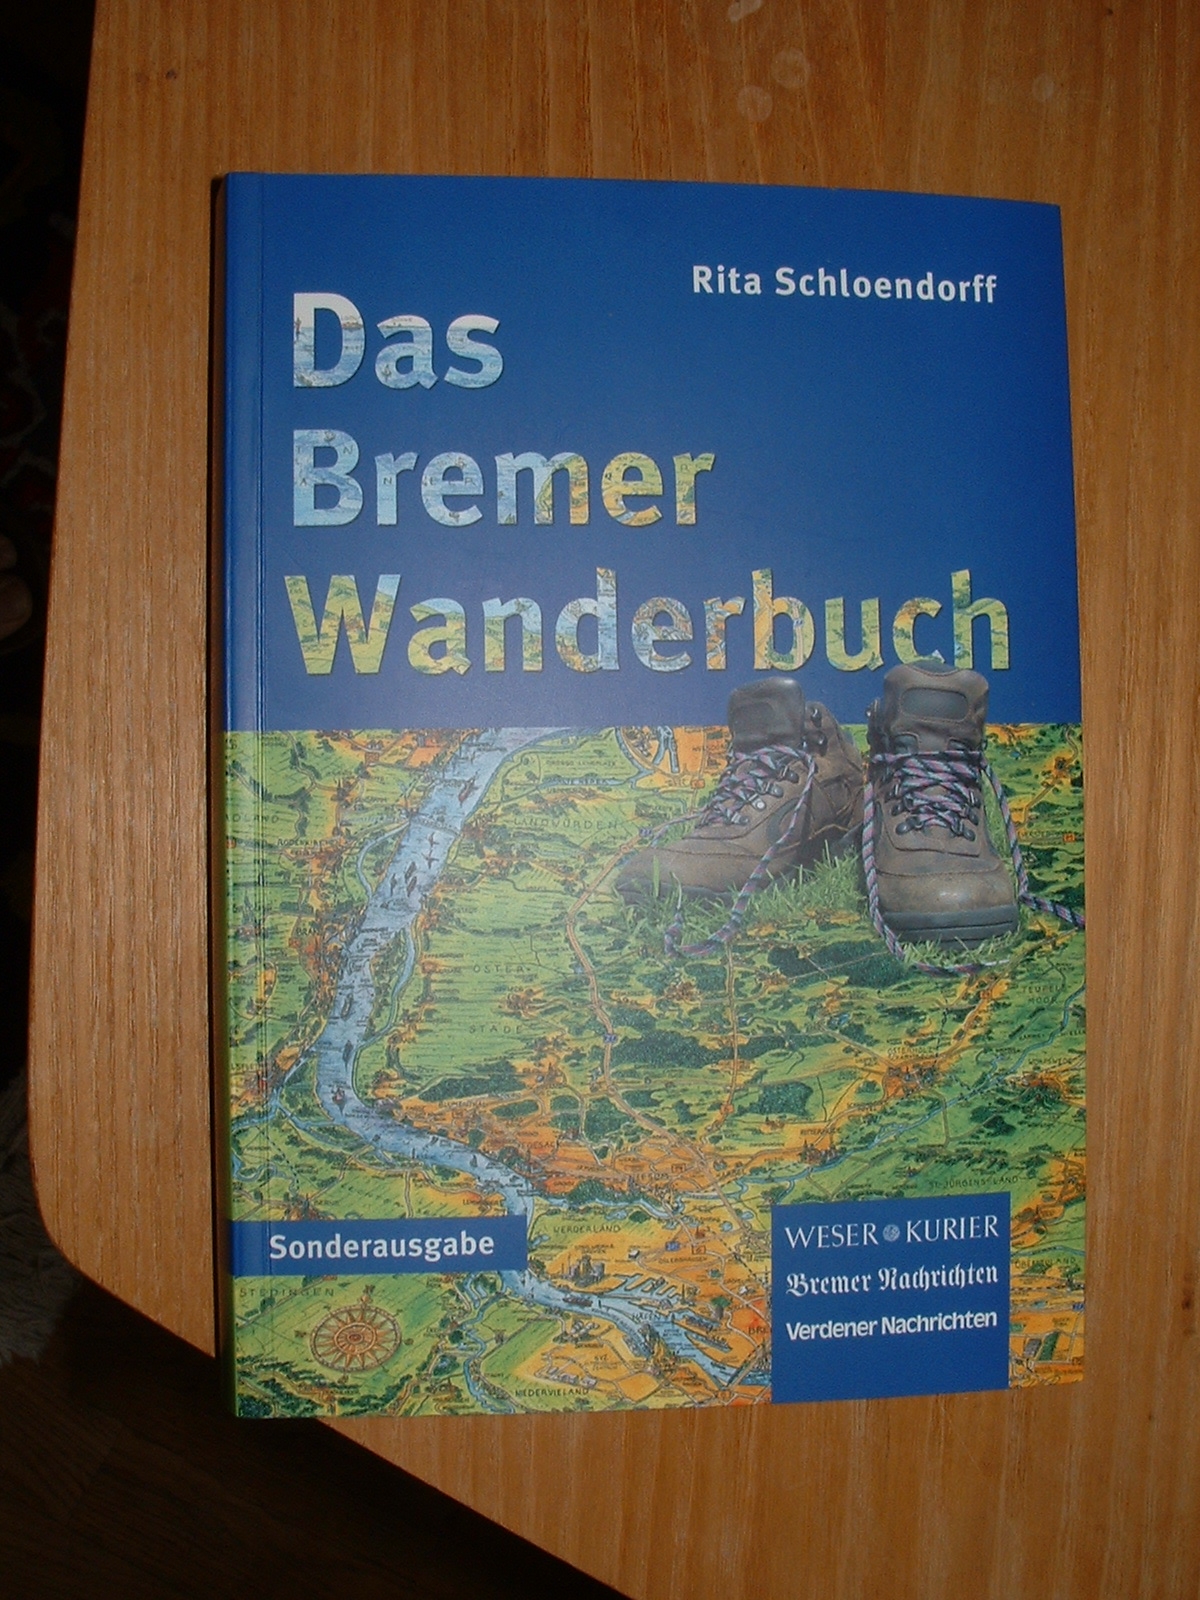 Weser Kurier - Sonderausgabe: Das Bremer Wanderbuch